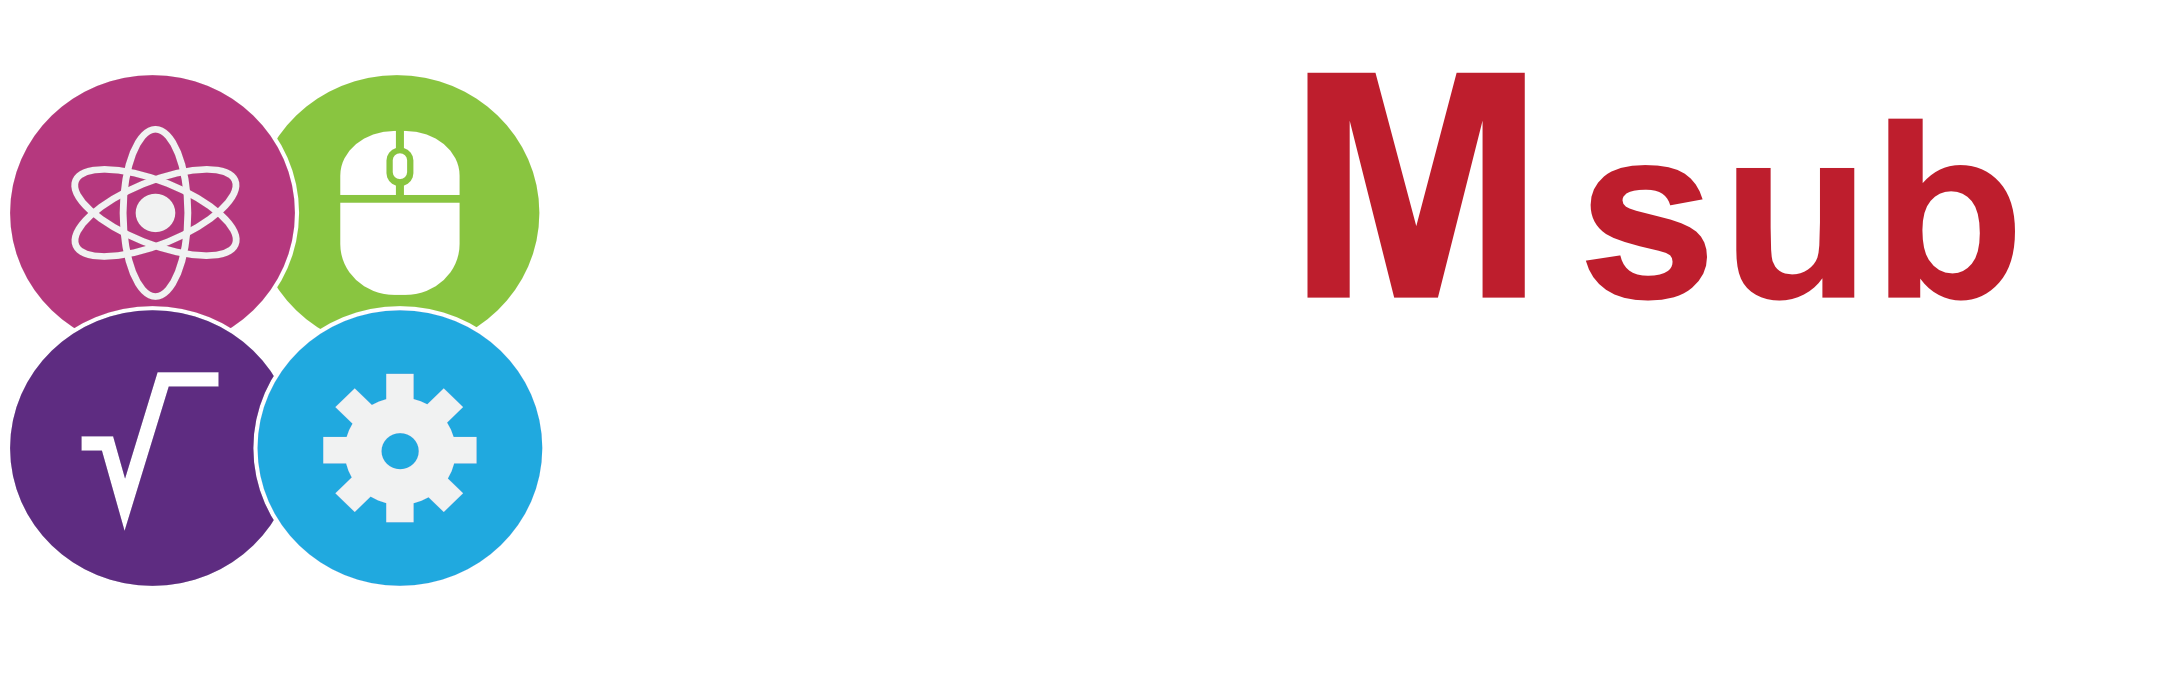 STEMsub logo